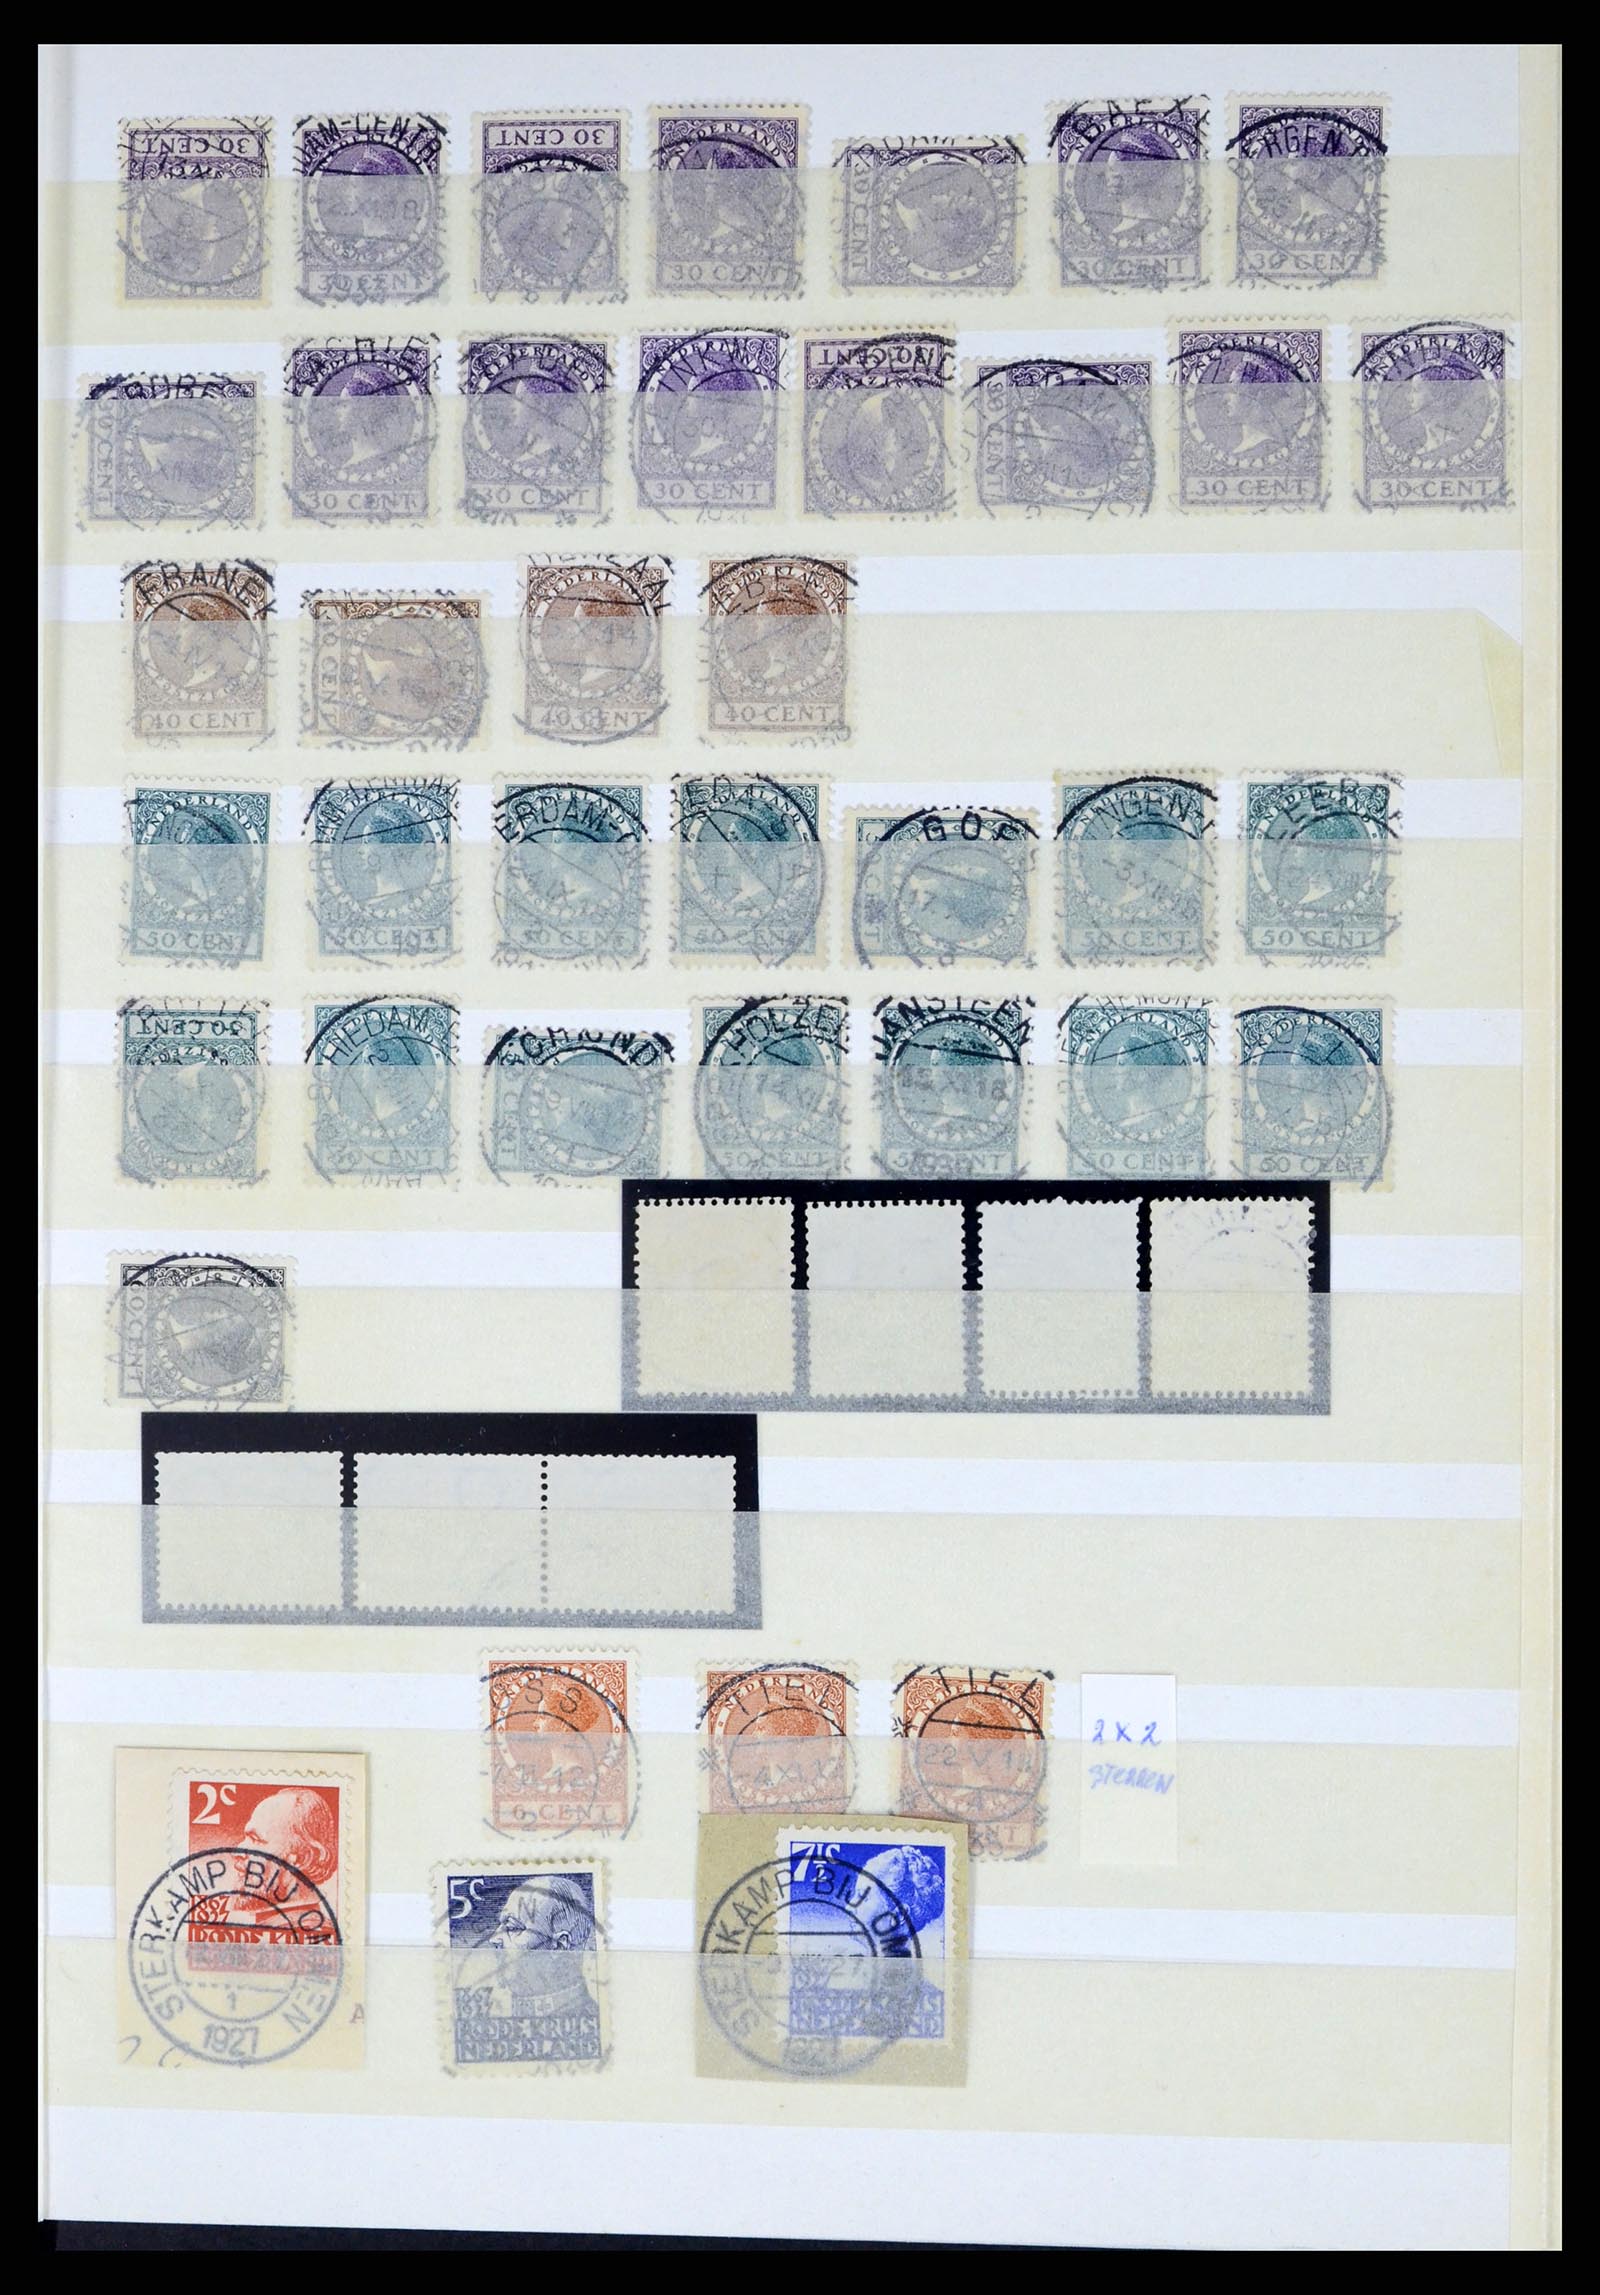 37424 011 - Stamp collection 37424 Netherlands shortbar cancels.